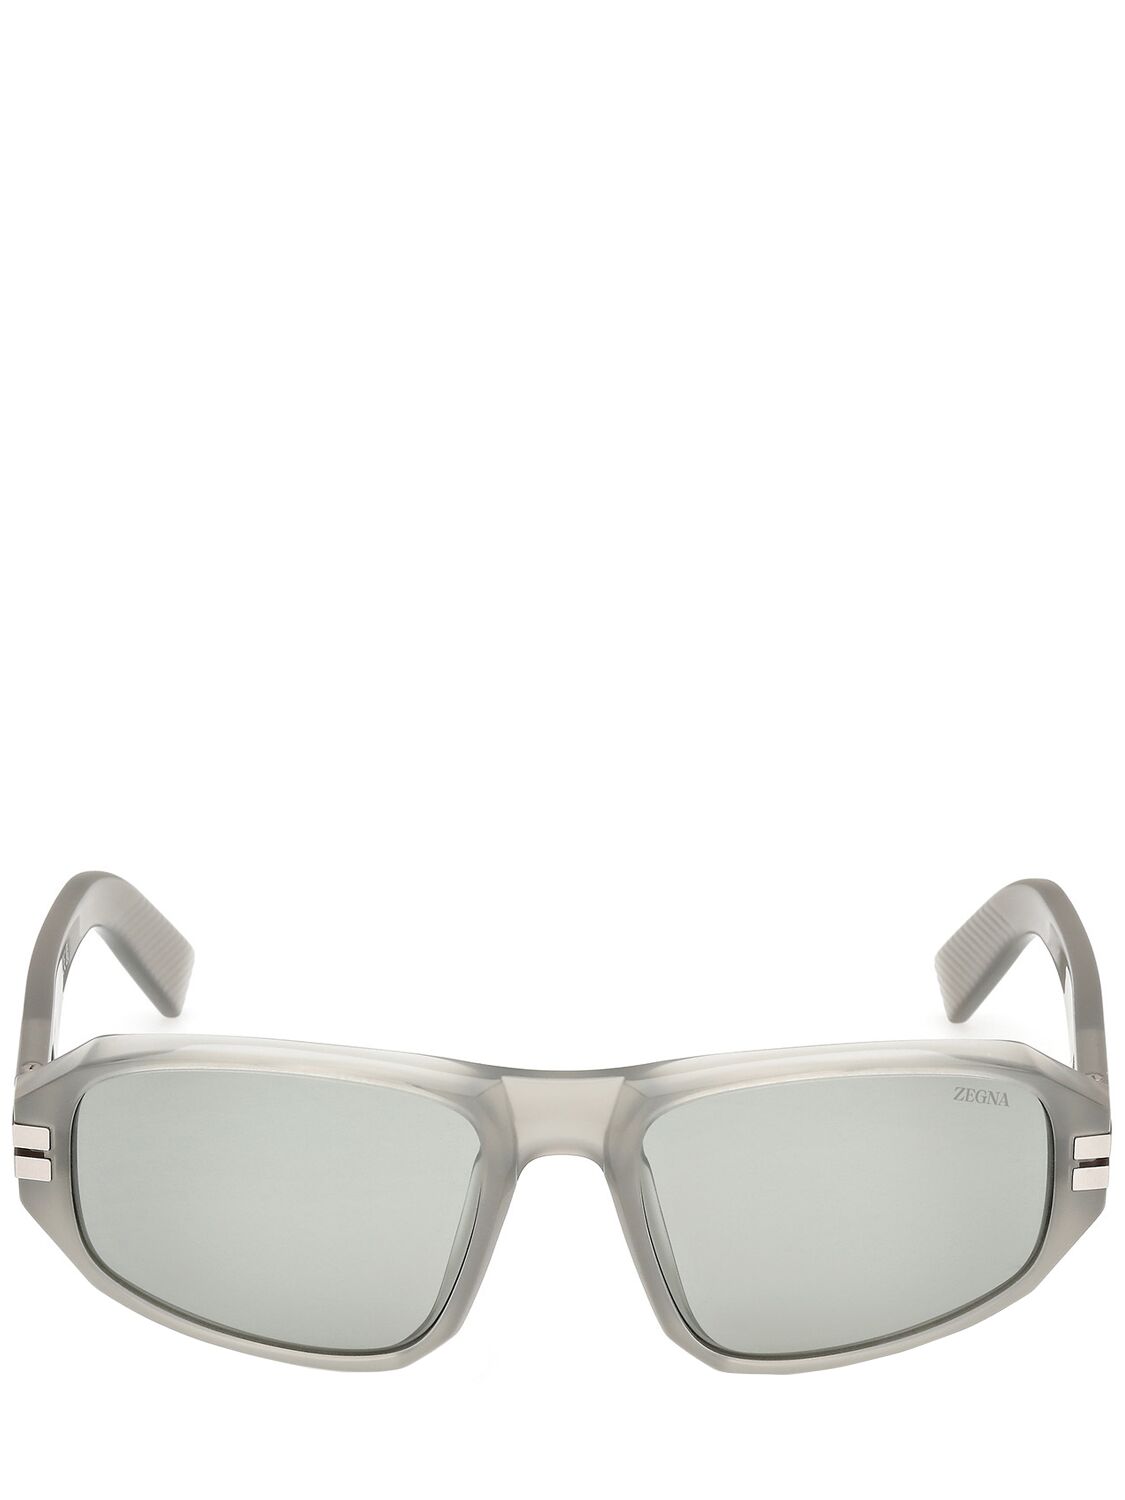 Zegna Squared Sunglasses In Grey,green